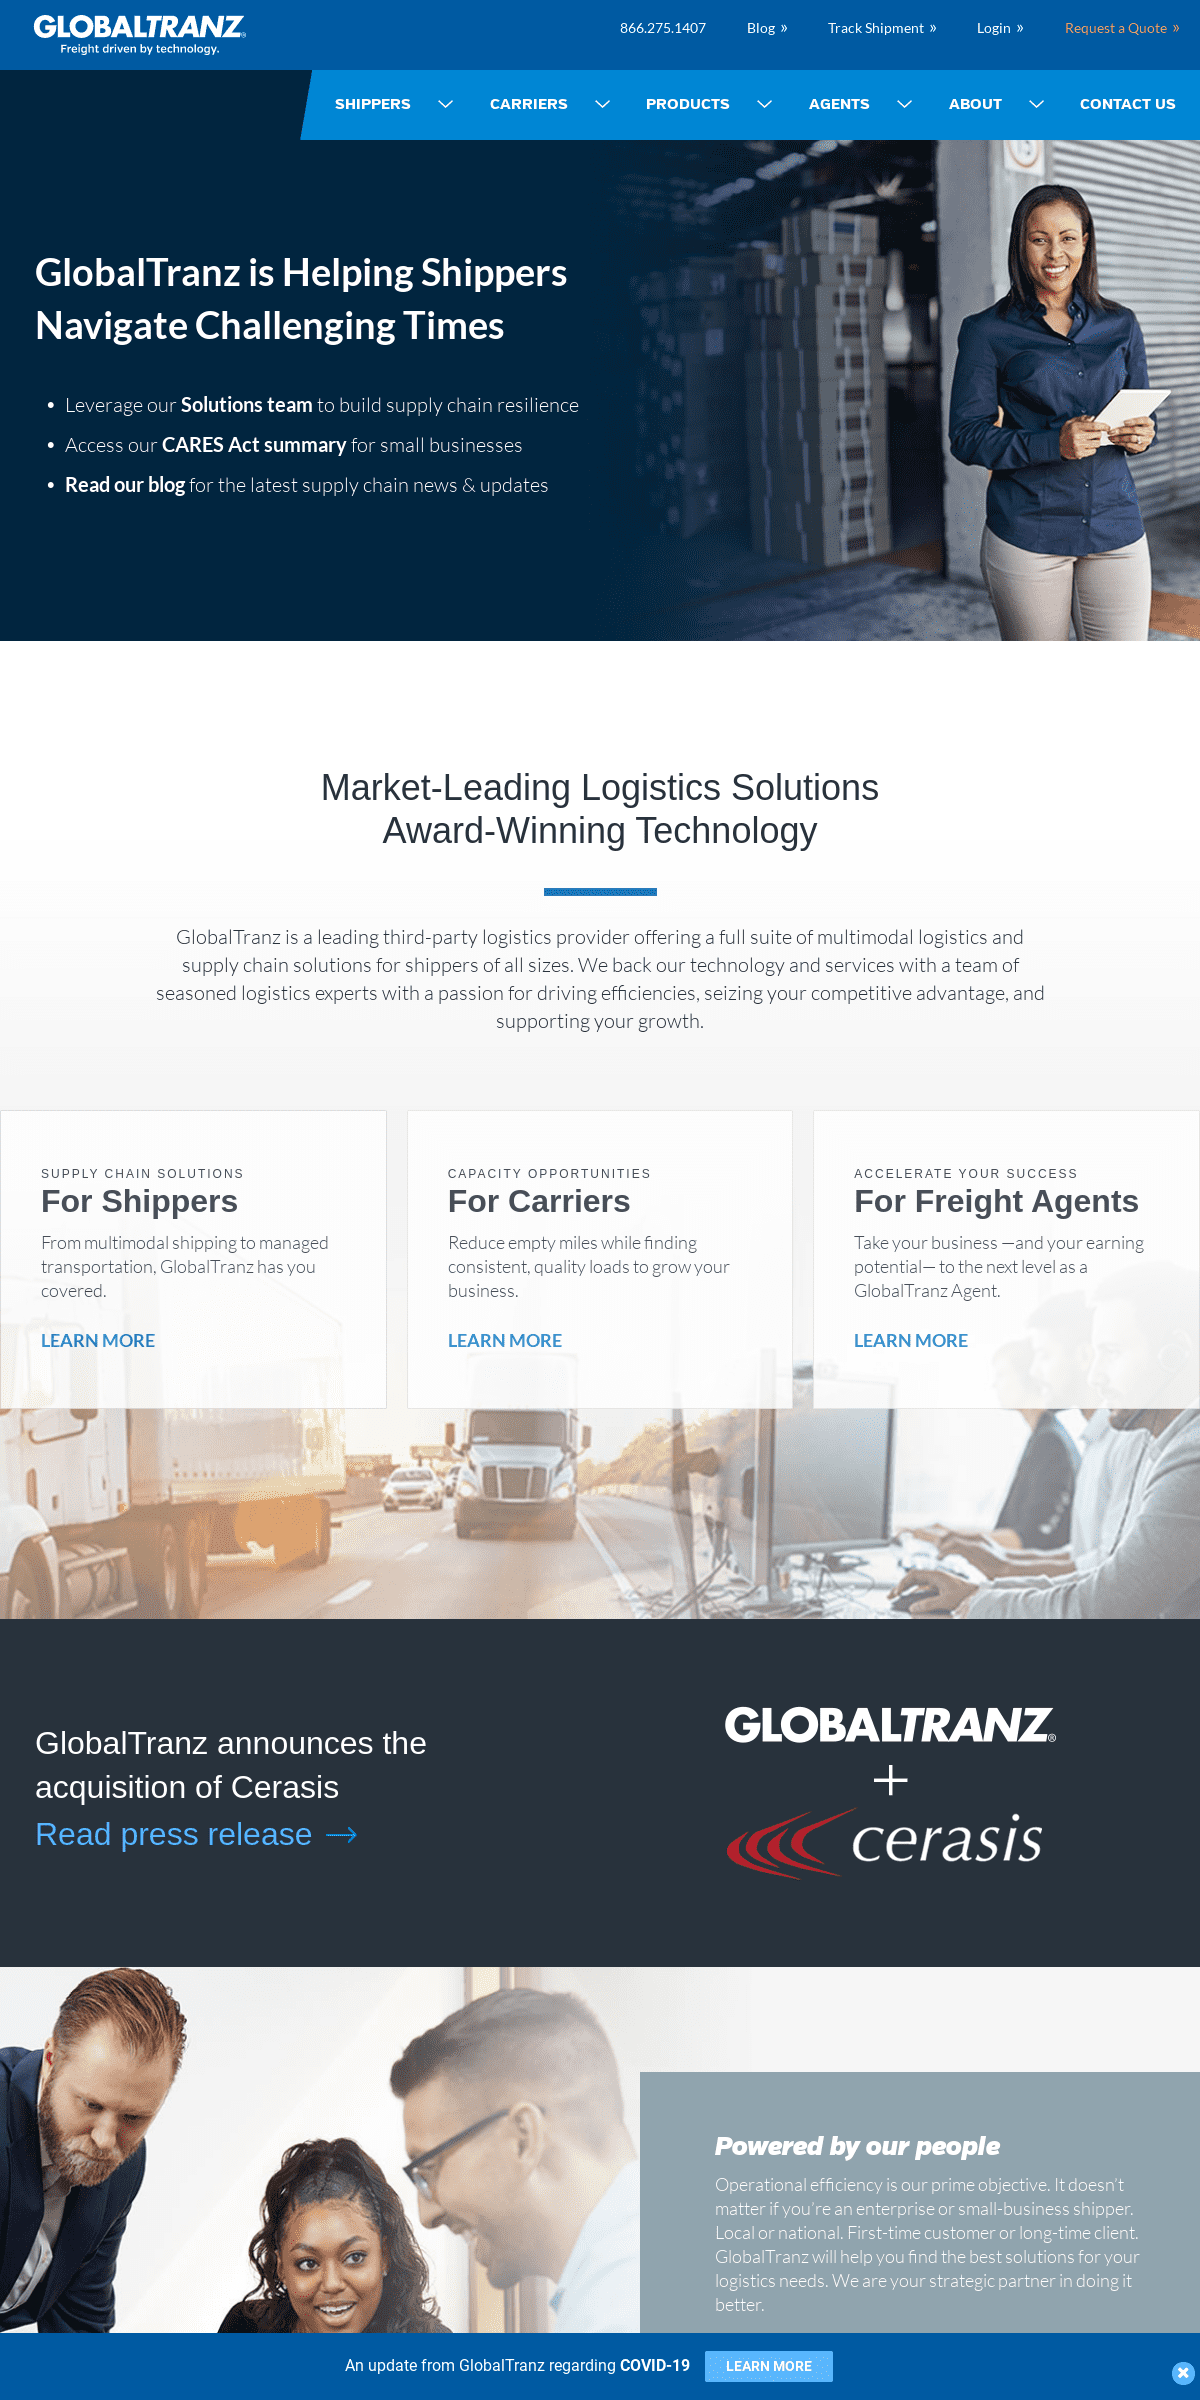 A complete backup of globaltranz.com